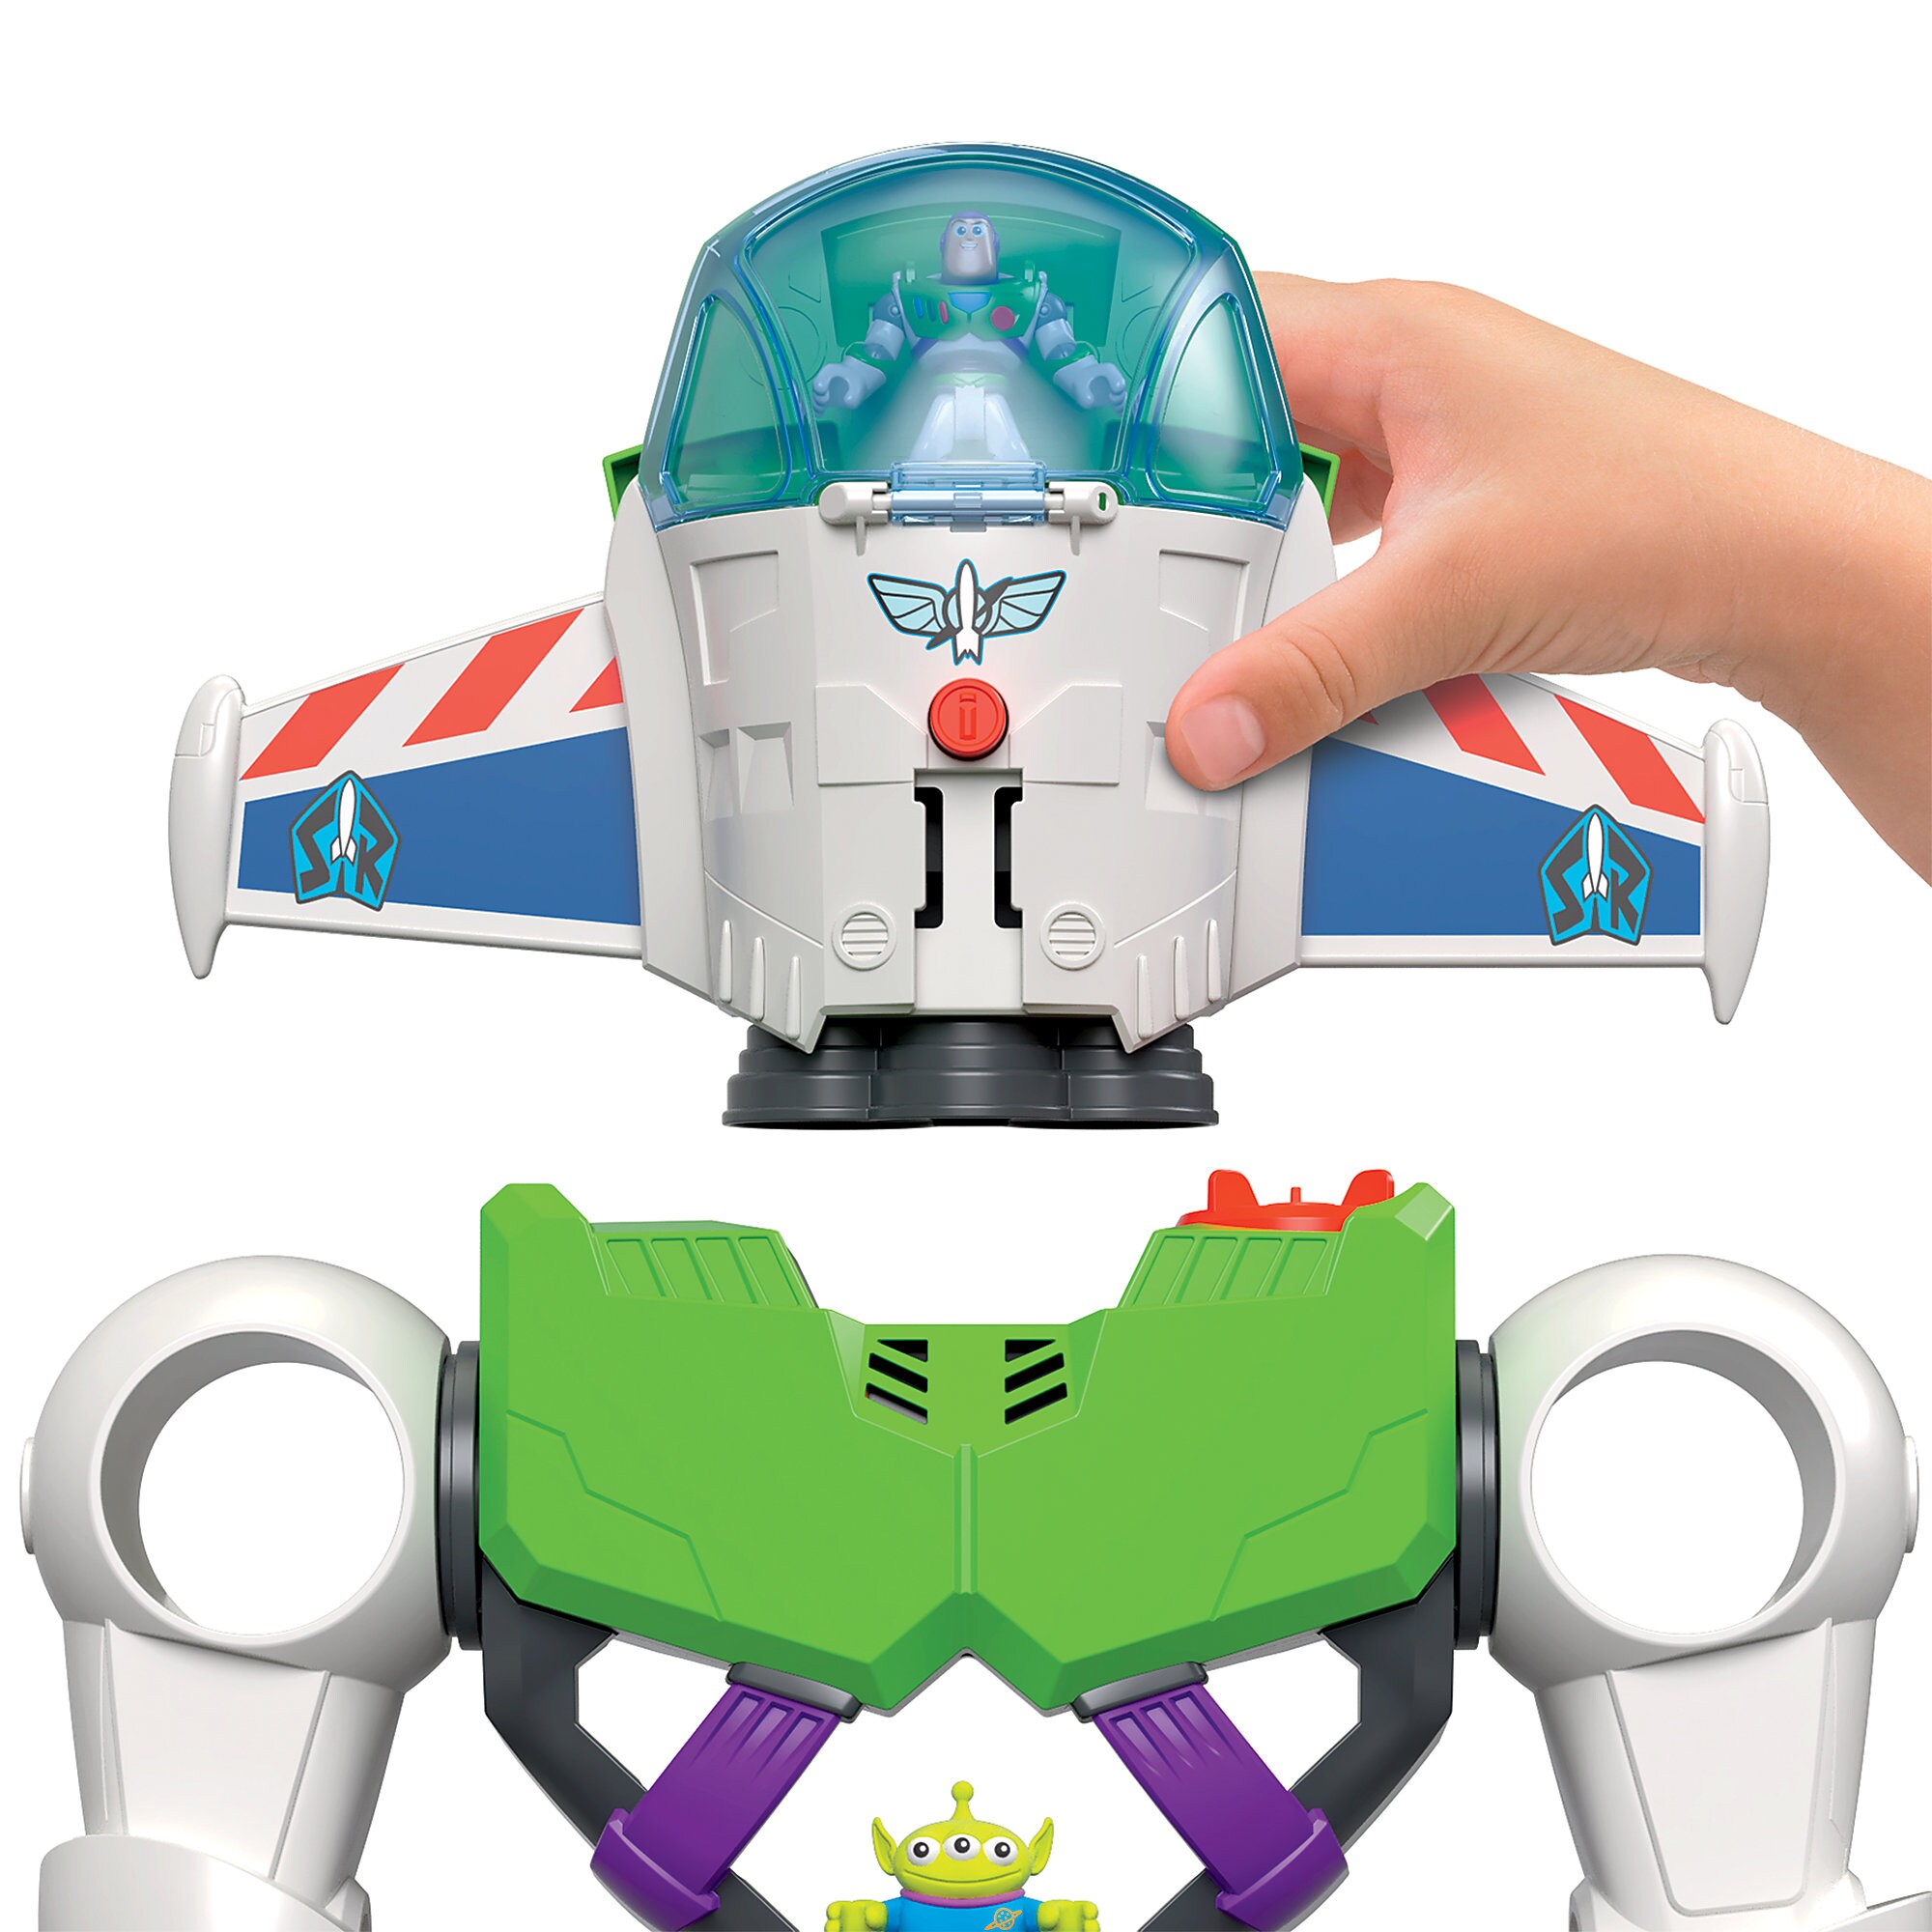 Buzz Lightyear Robot - Toy Story 4